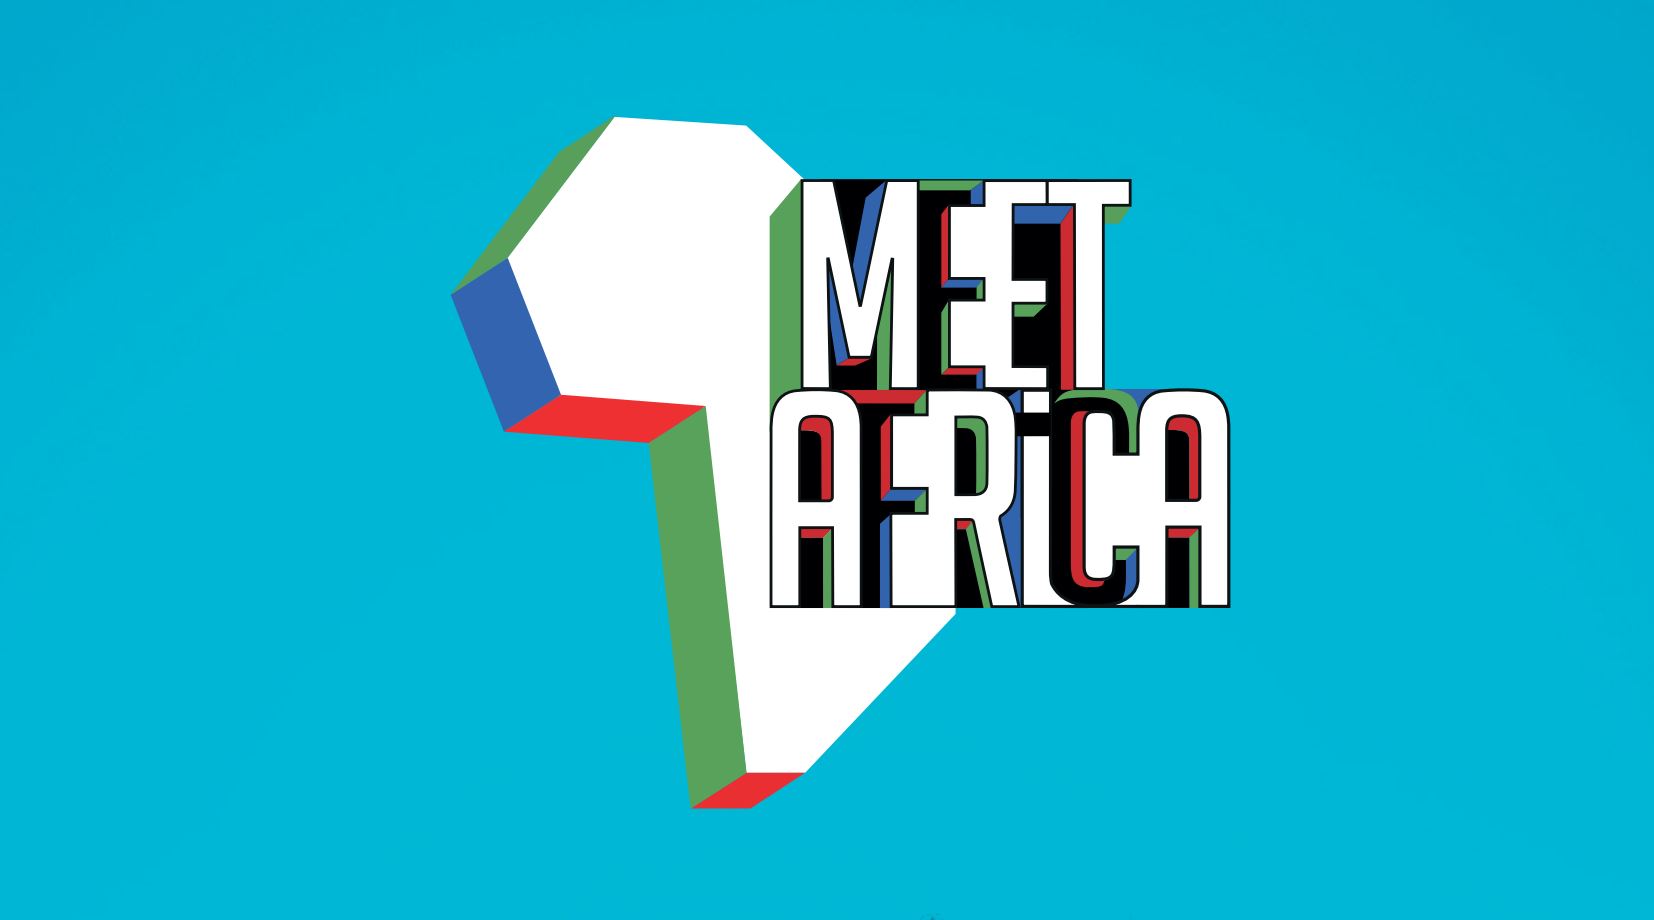 France: L’Association Maroc Entrepreneurs lance le Programme Meet Africa 2 Maroc